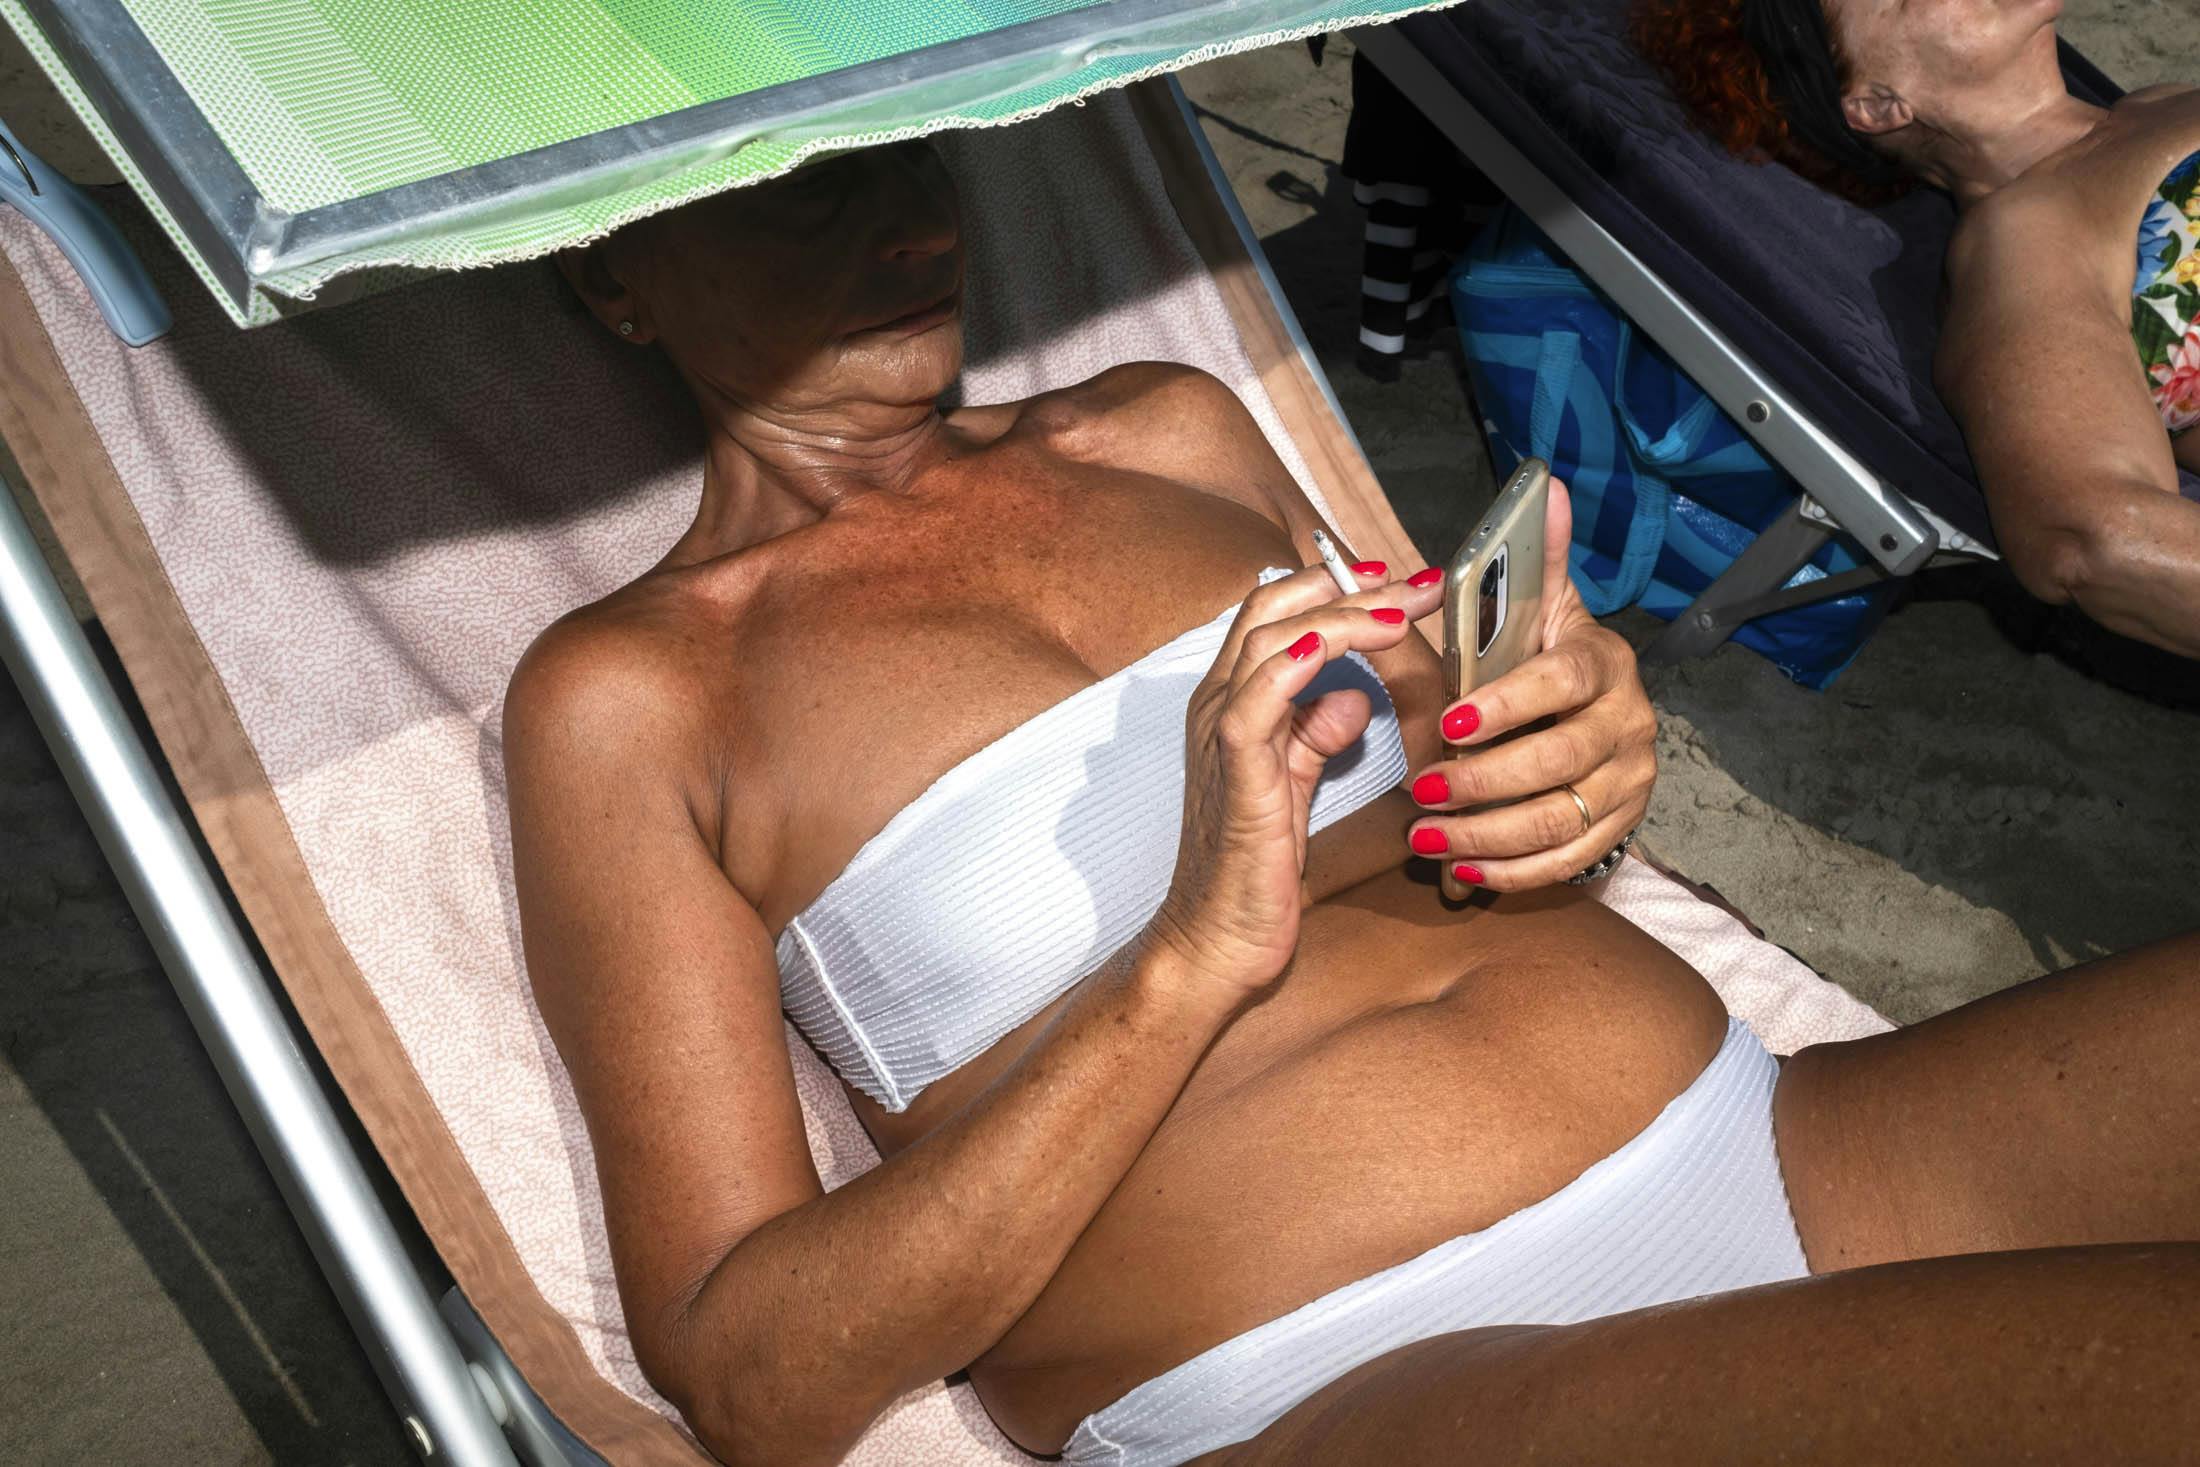 woman on sun lounger using phone and smoking